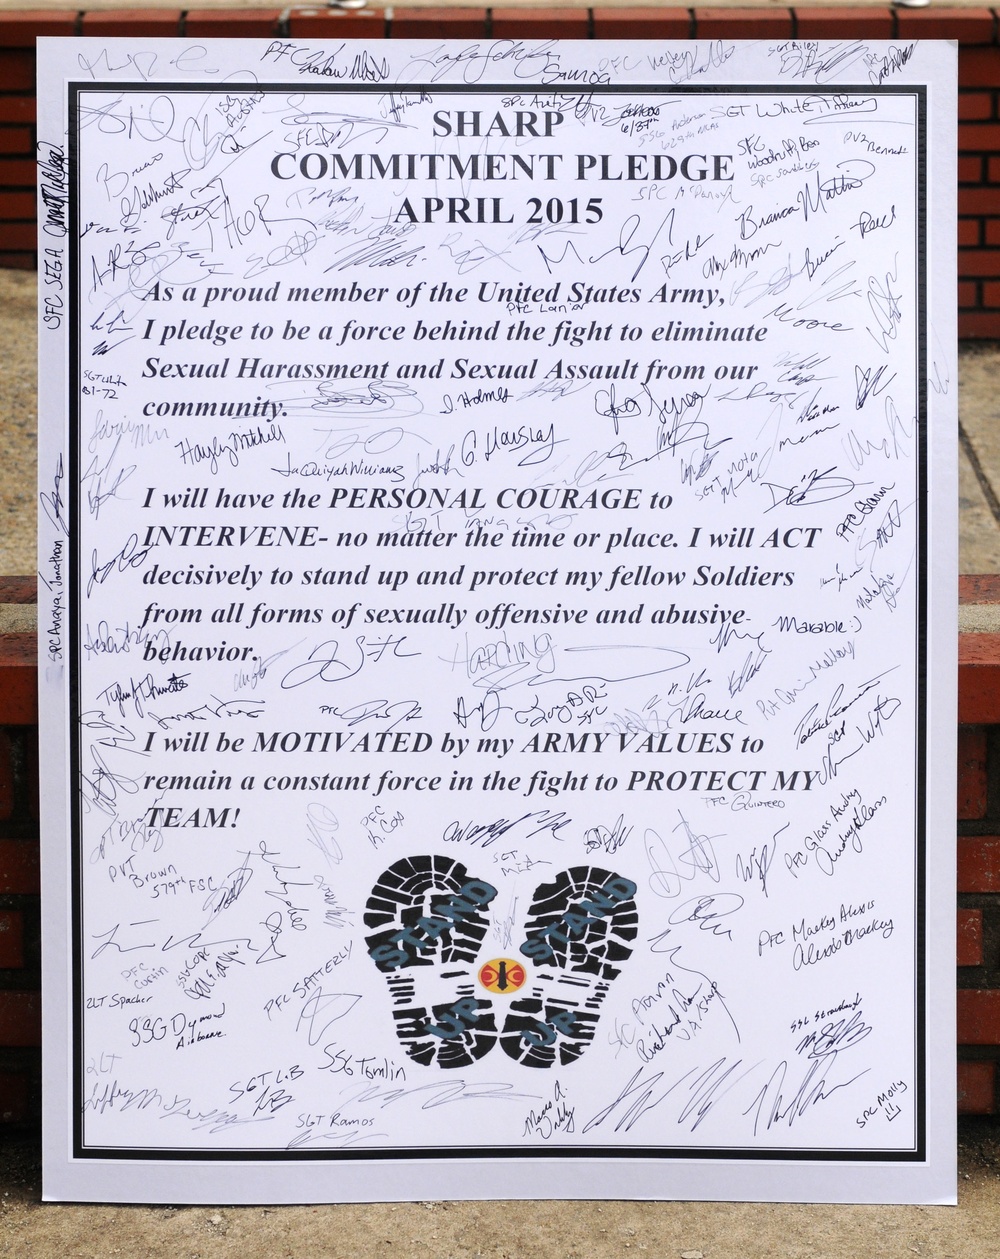 Commitment pledge